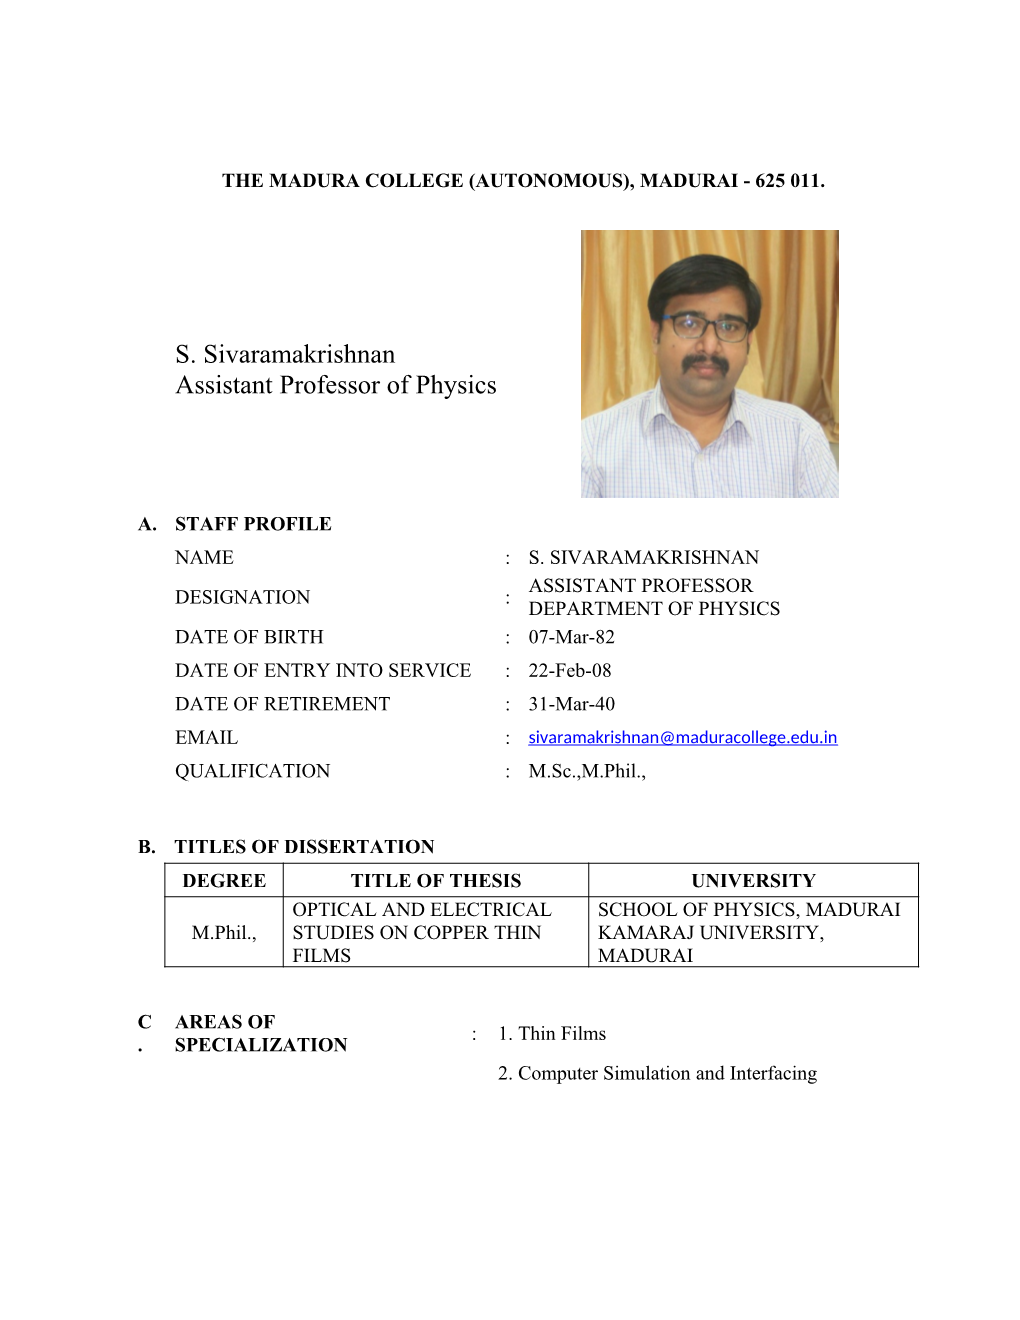 S. Sivaramakrishnan Assistant Professor of Physics